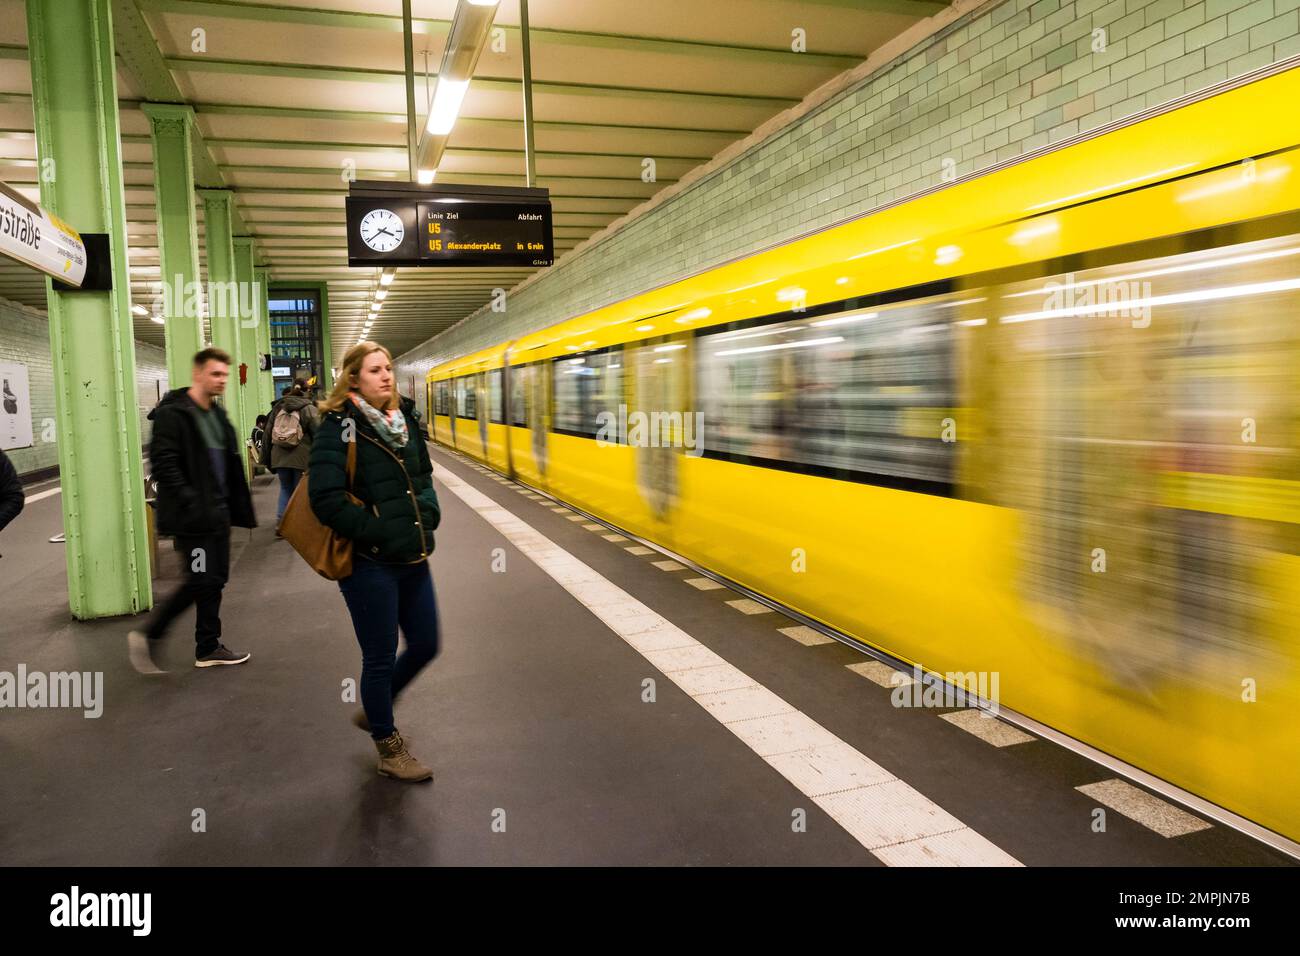 yellow train metropolitan railway, Berlin, Germany, europe Stock Photo